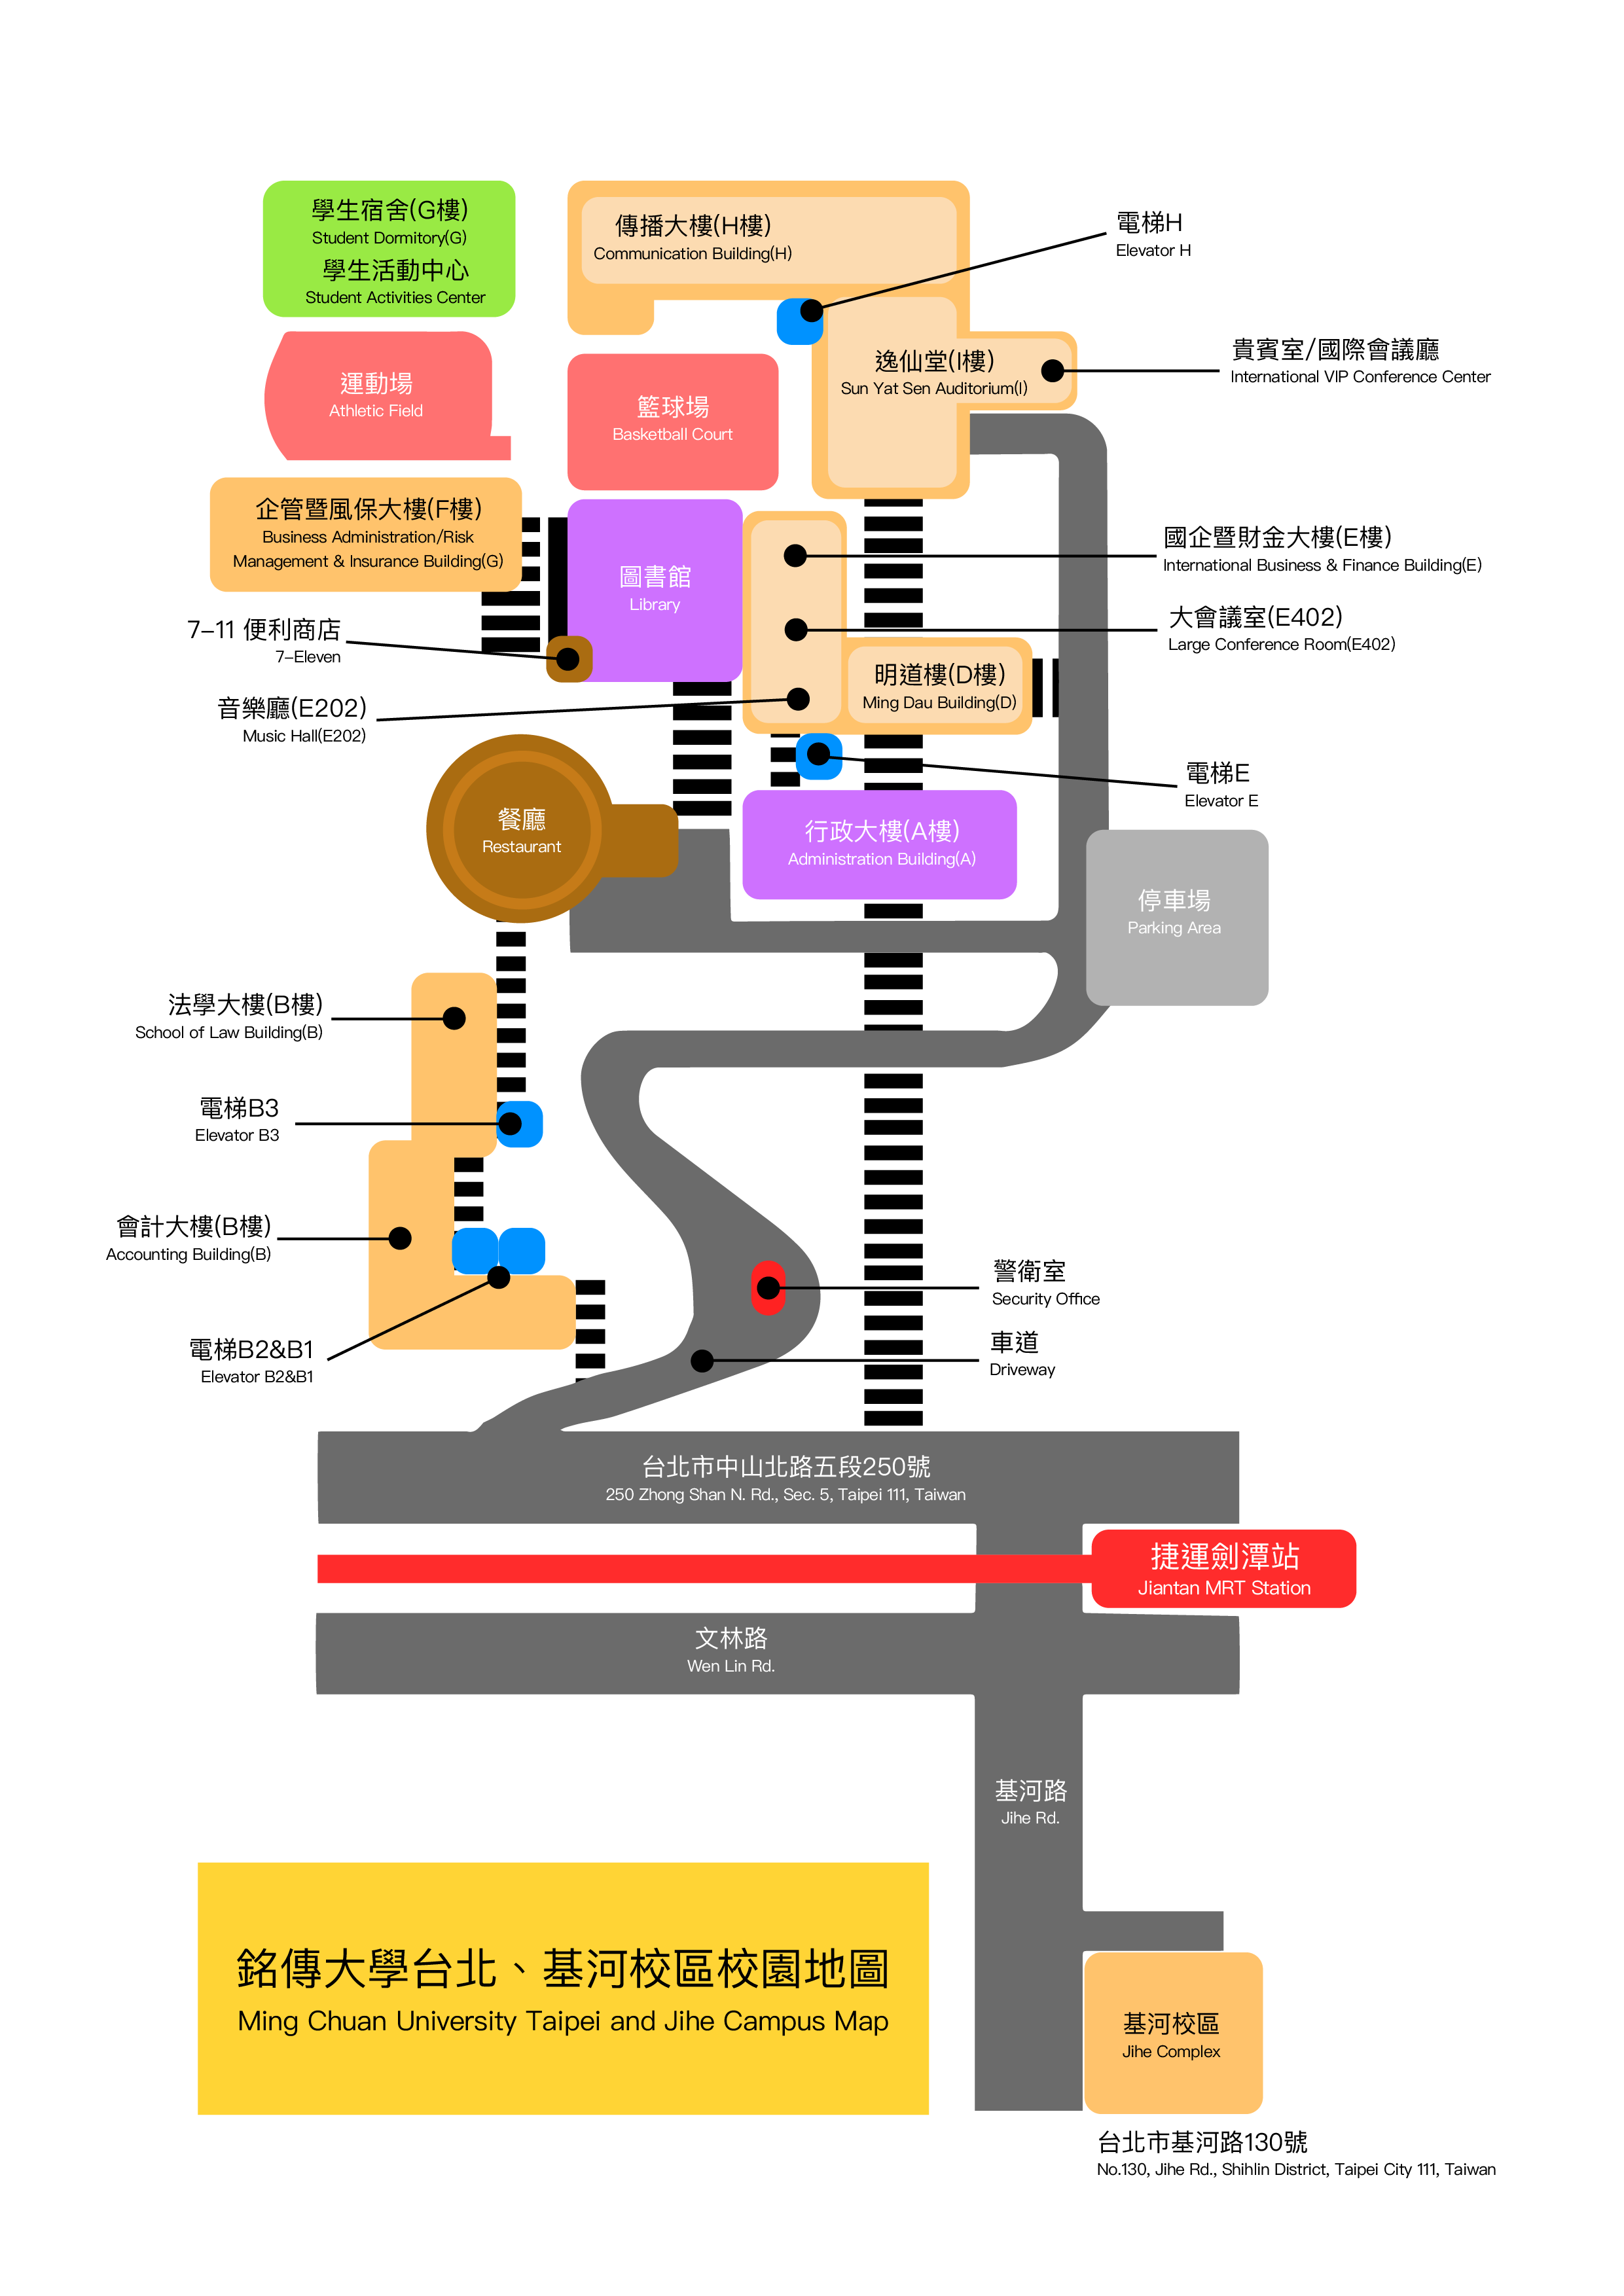 Taipei Campus Map